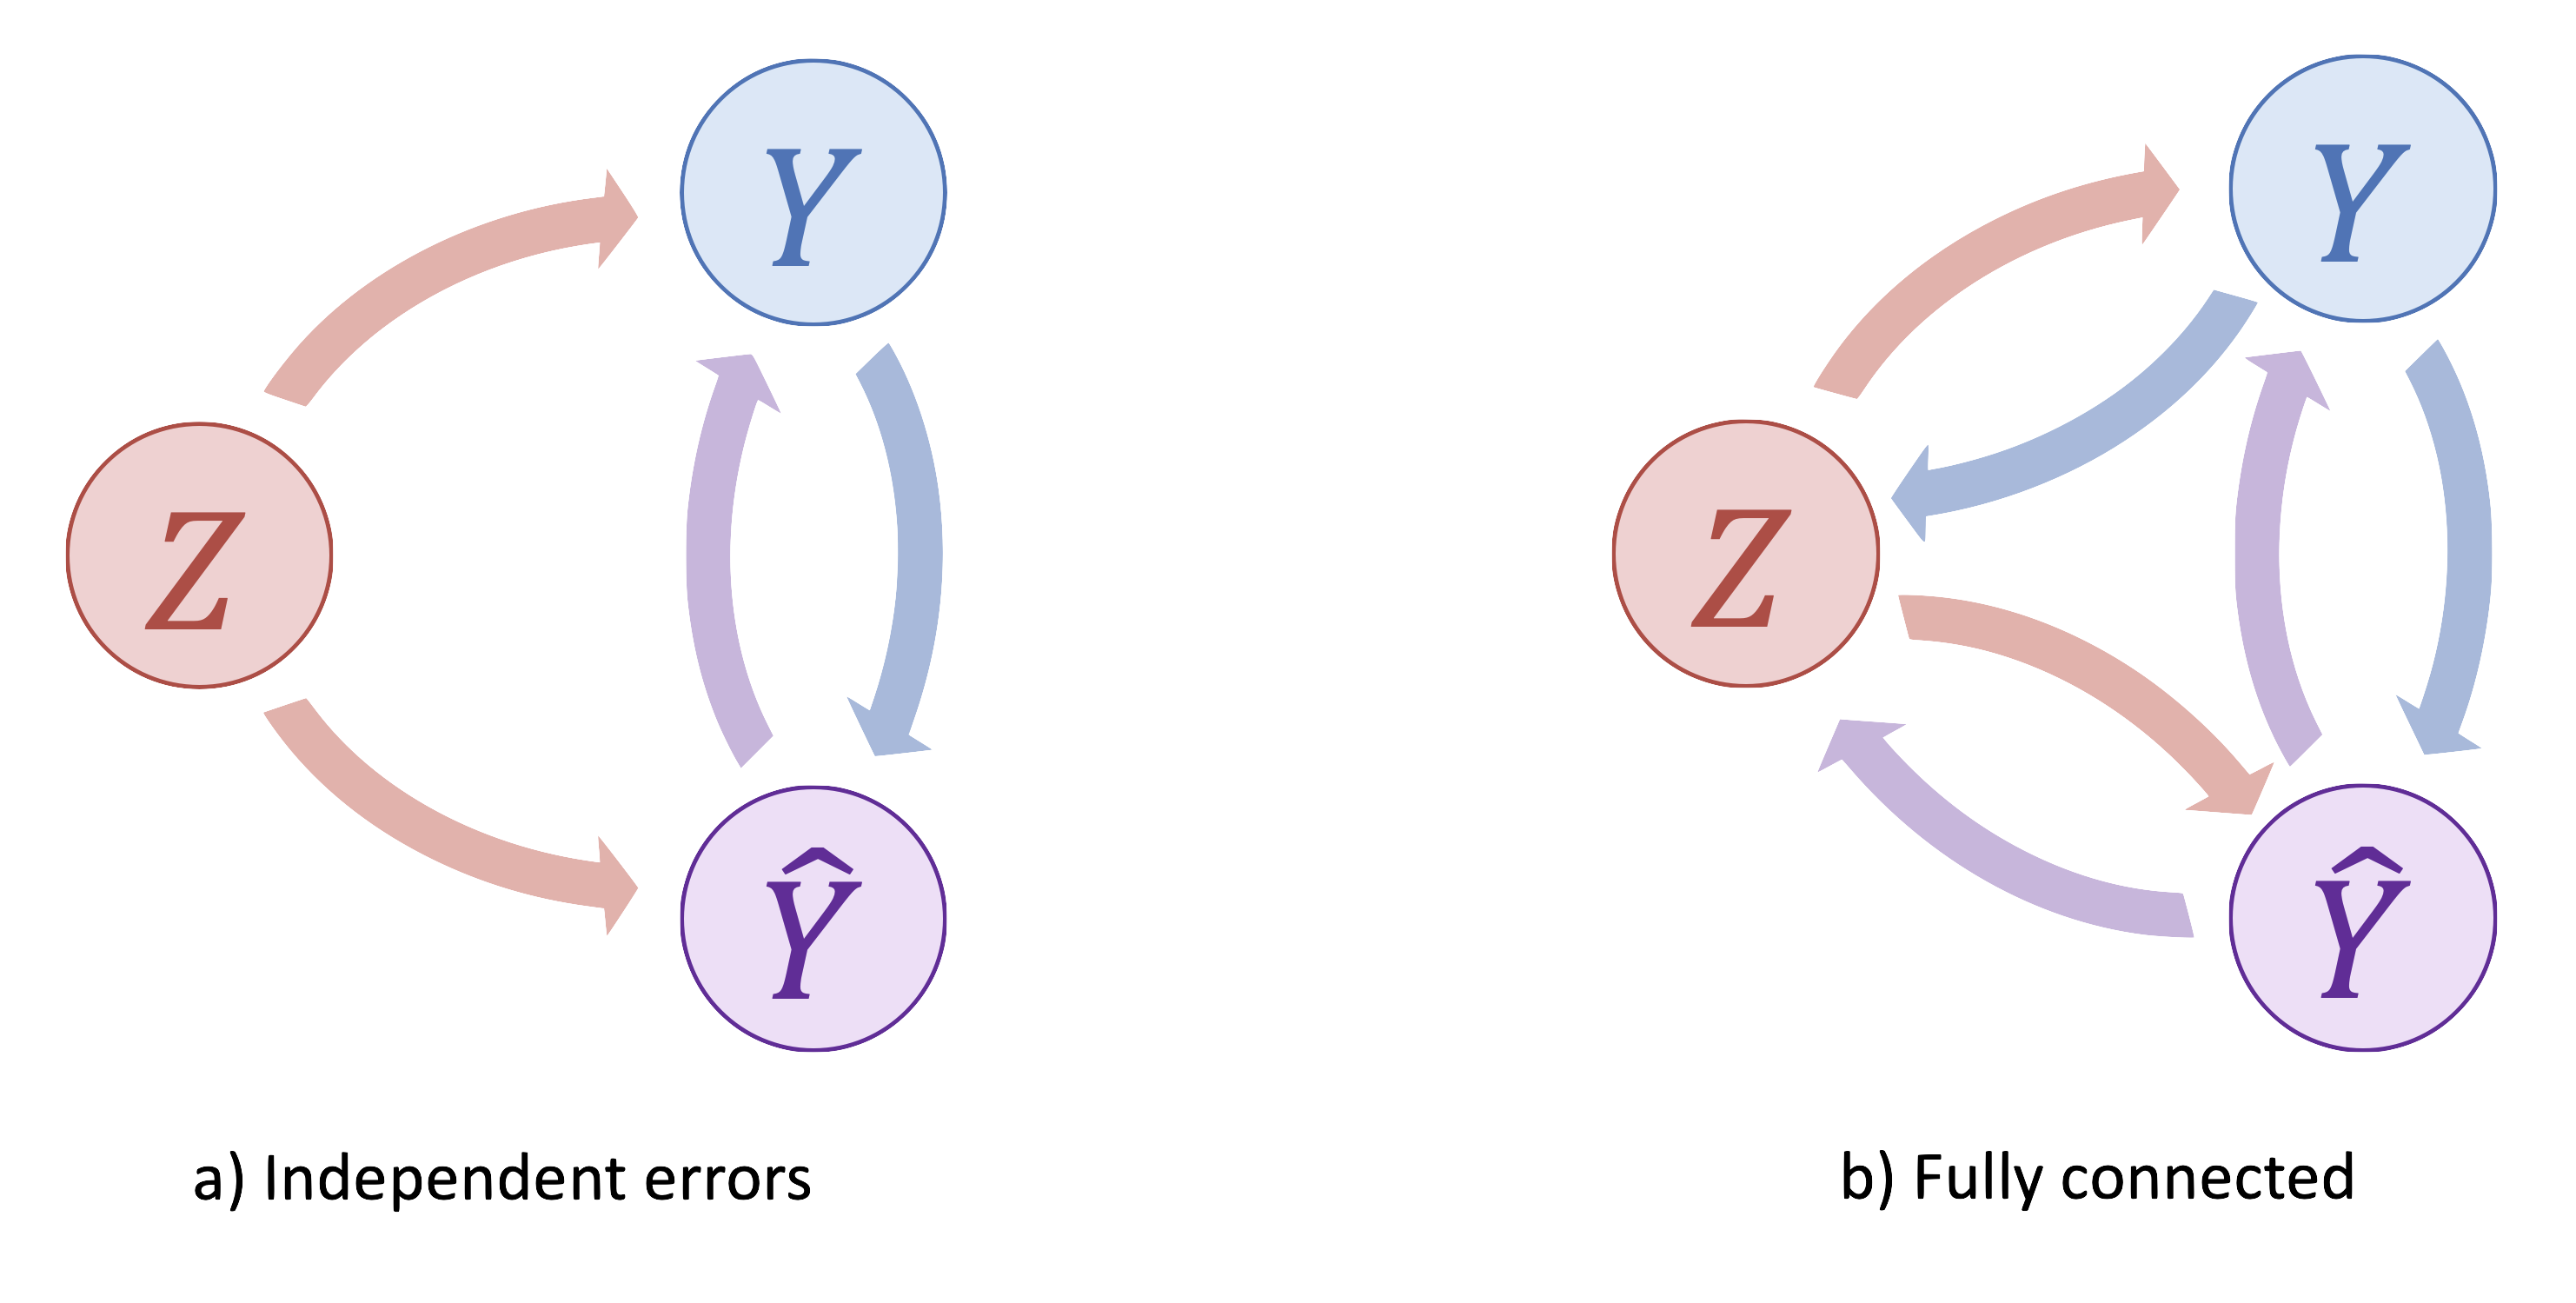 Figure 3.4: Alternative causal models.